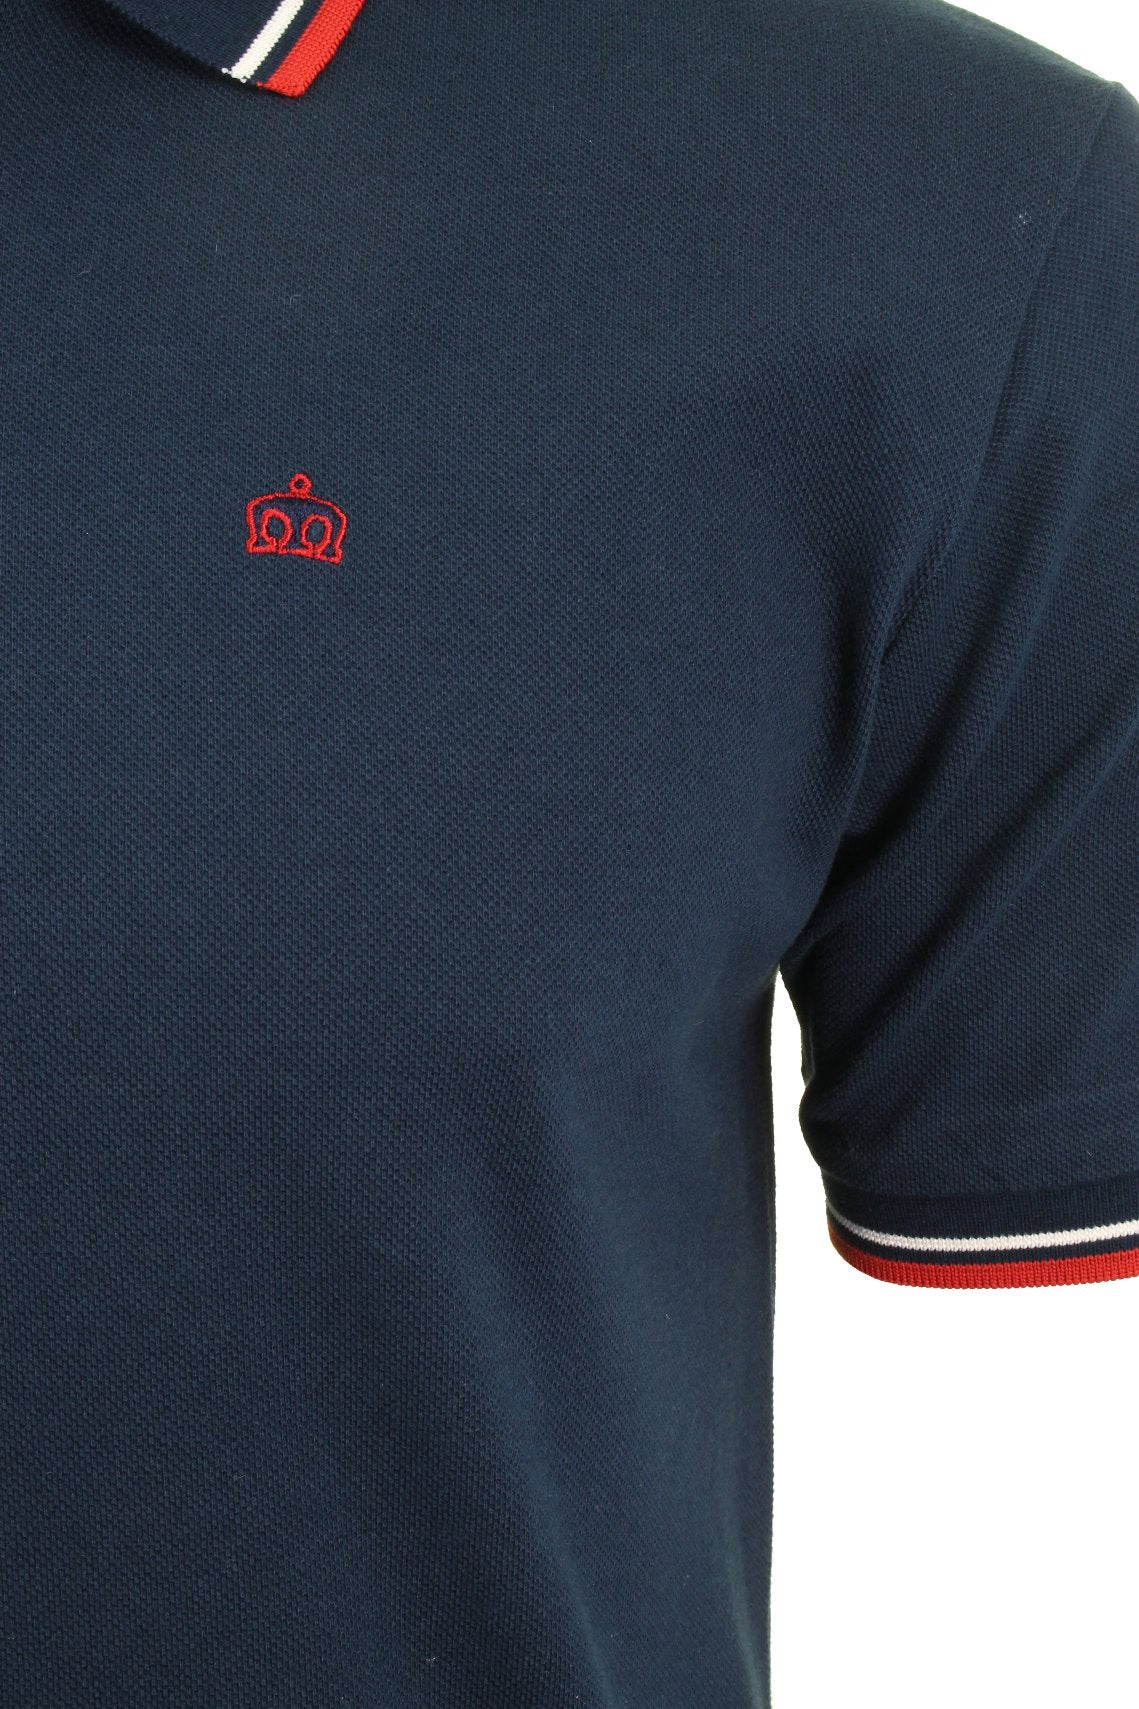 Mens Merc London 'Card' Pique Polo Shirt Mod Retro, 02, CARD_, Navy Blue/ Red